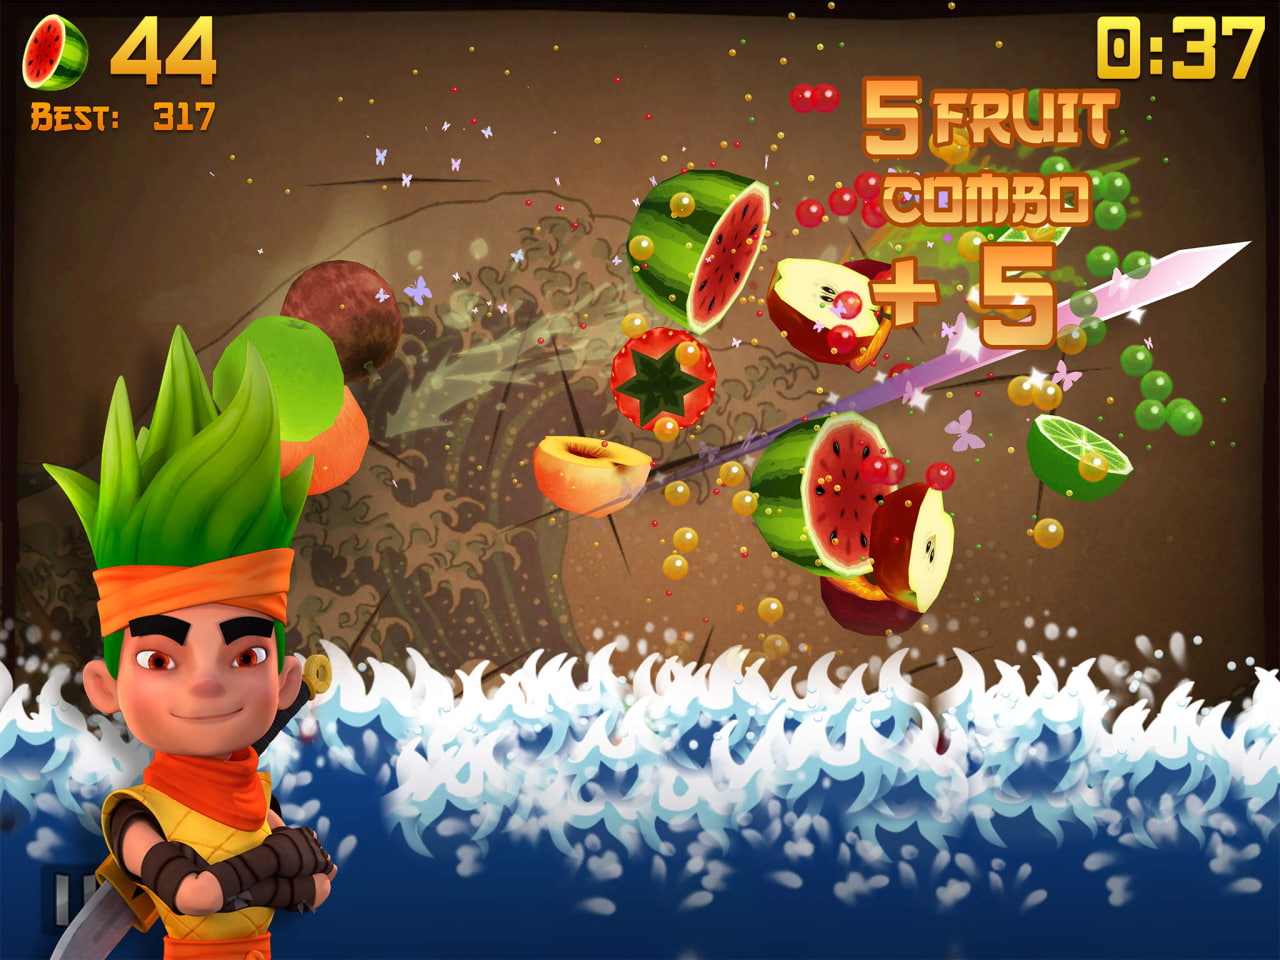 Fruit Ninja - Free Online Game - Play Now